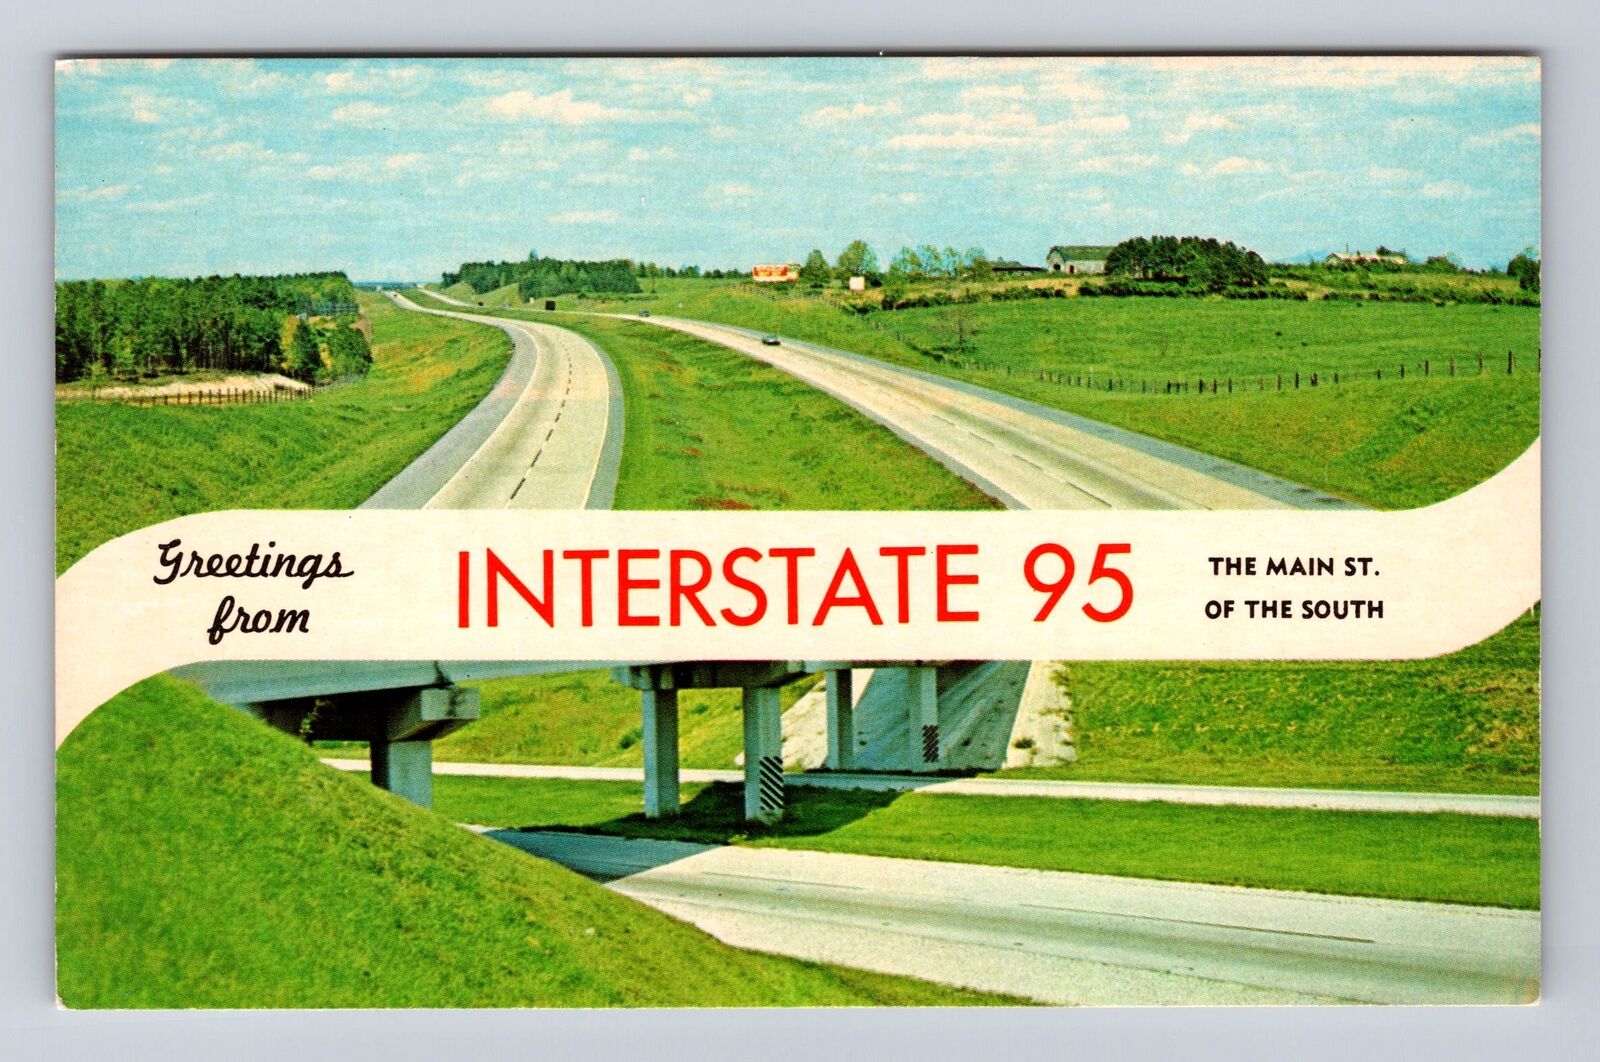 Philadelphia PA-Pennsylvania, General Banner Greeting I-95 Vintage Postcard